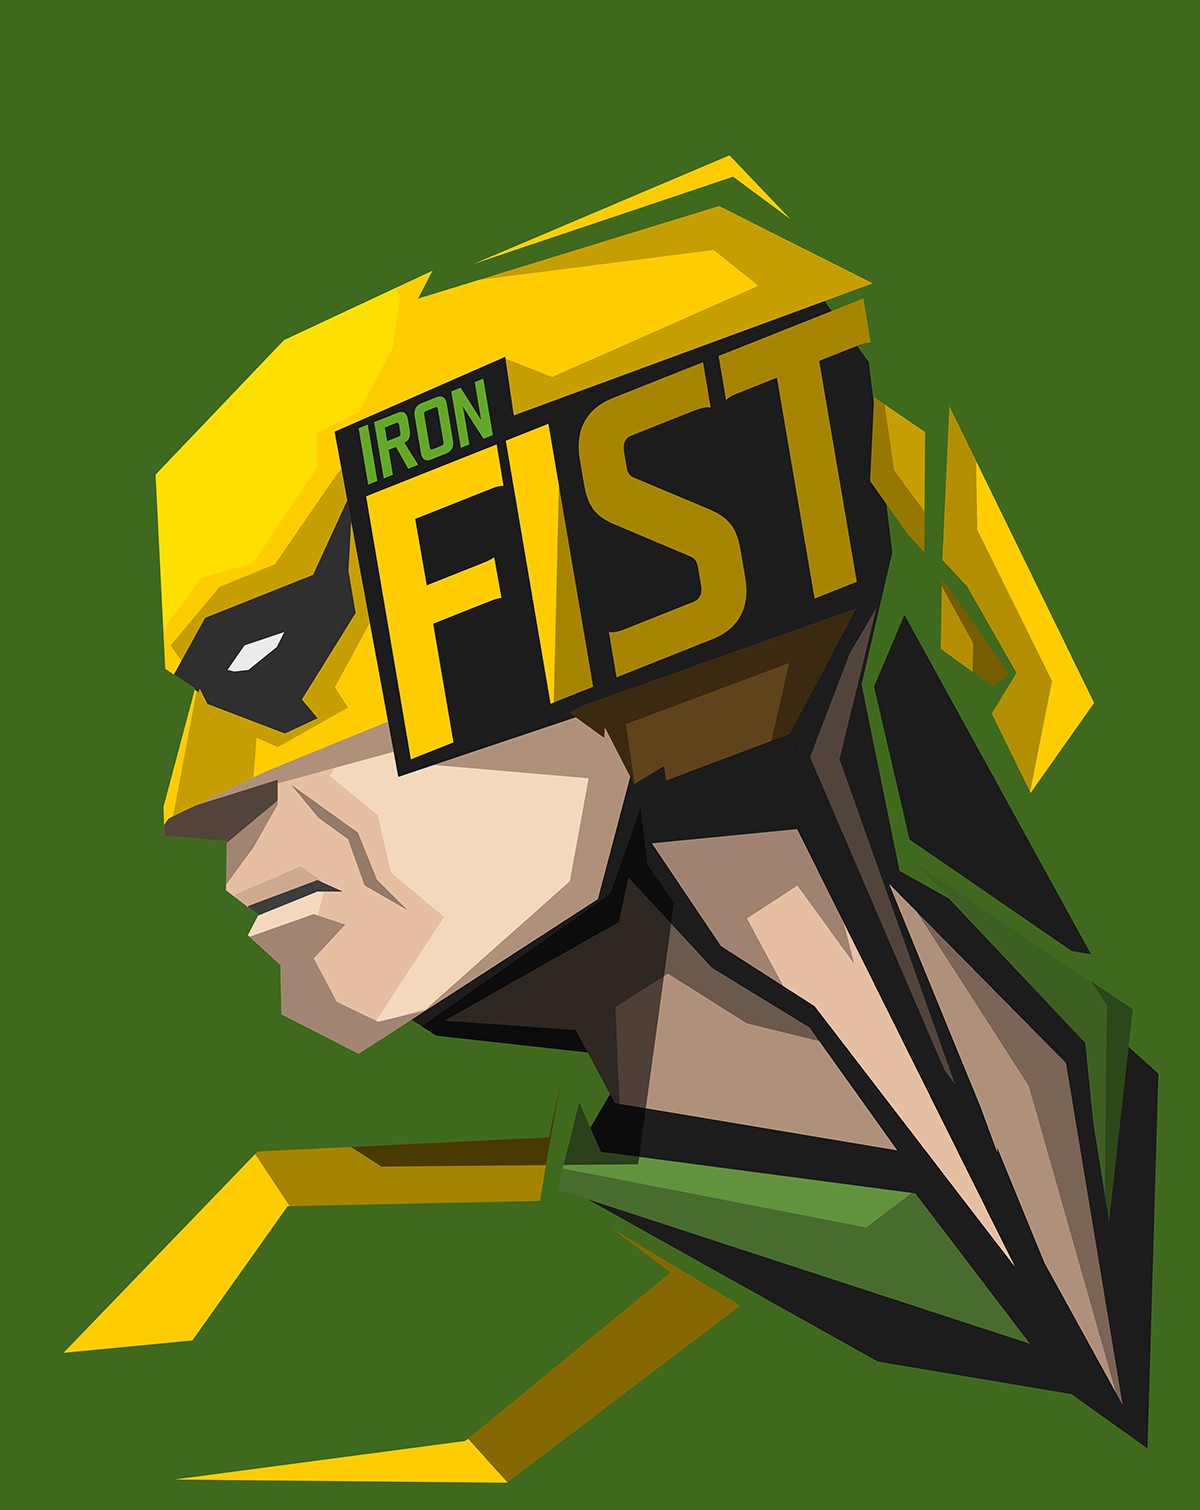 superhero, Iron Fist, Marvel Comics, Green background Wallpaper